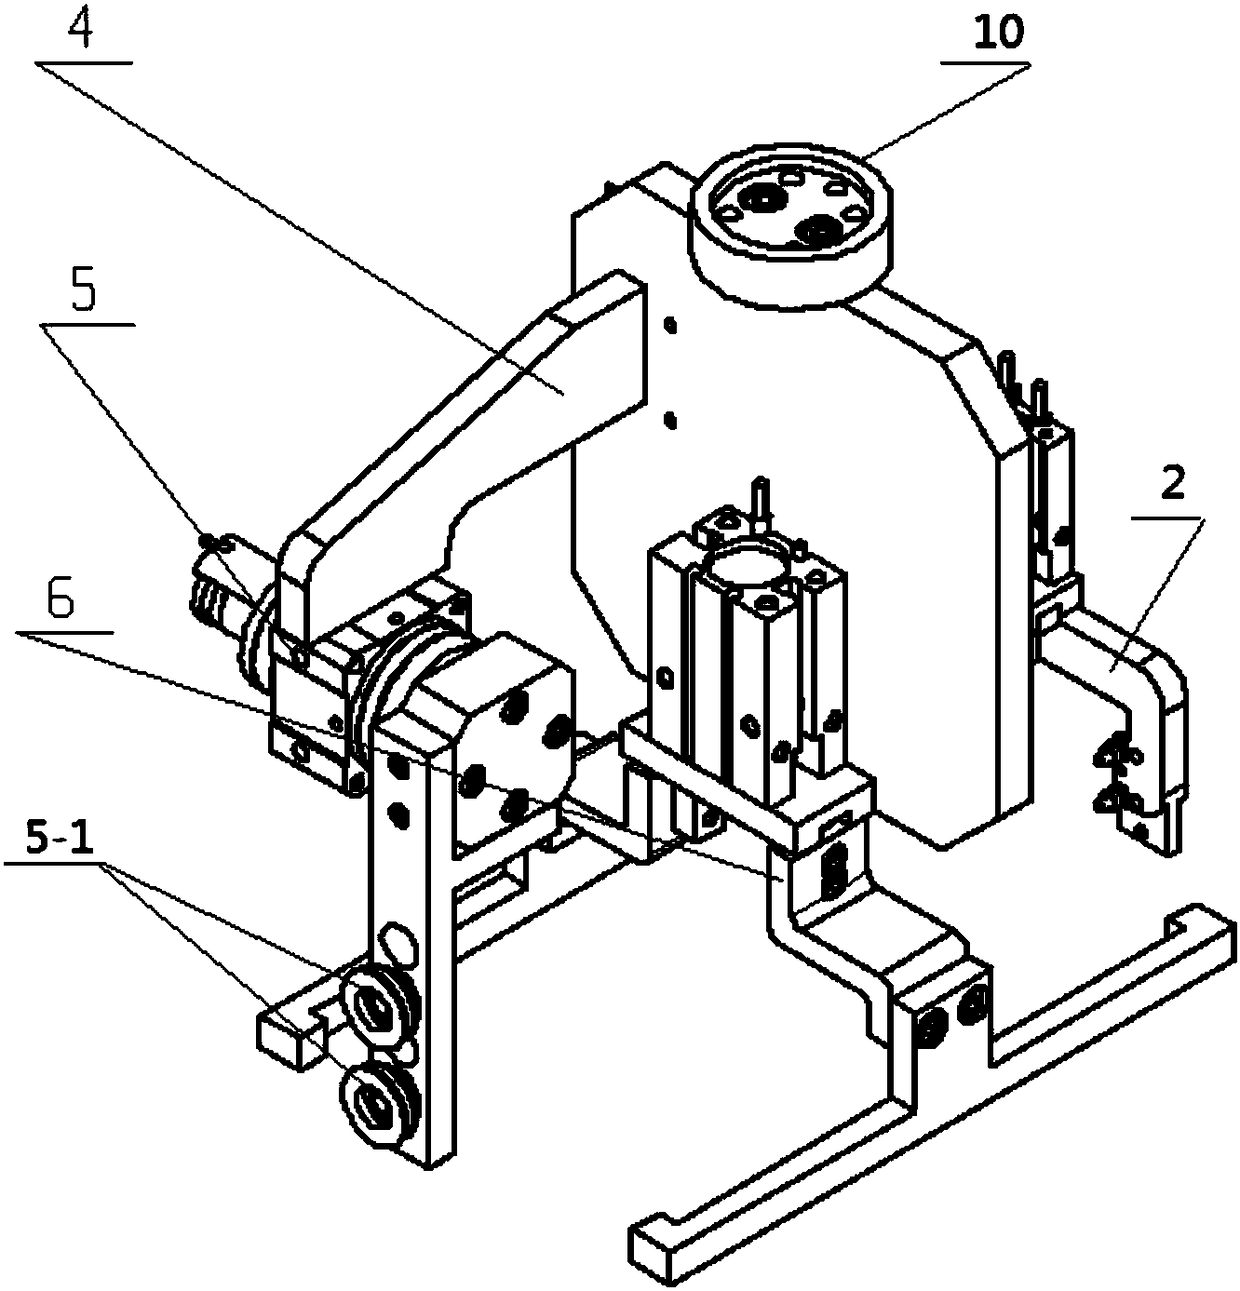 Feeding-discharging and glass detection manipulator of hot bending machine